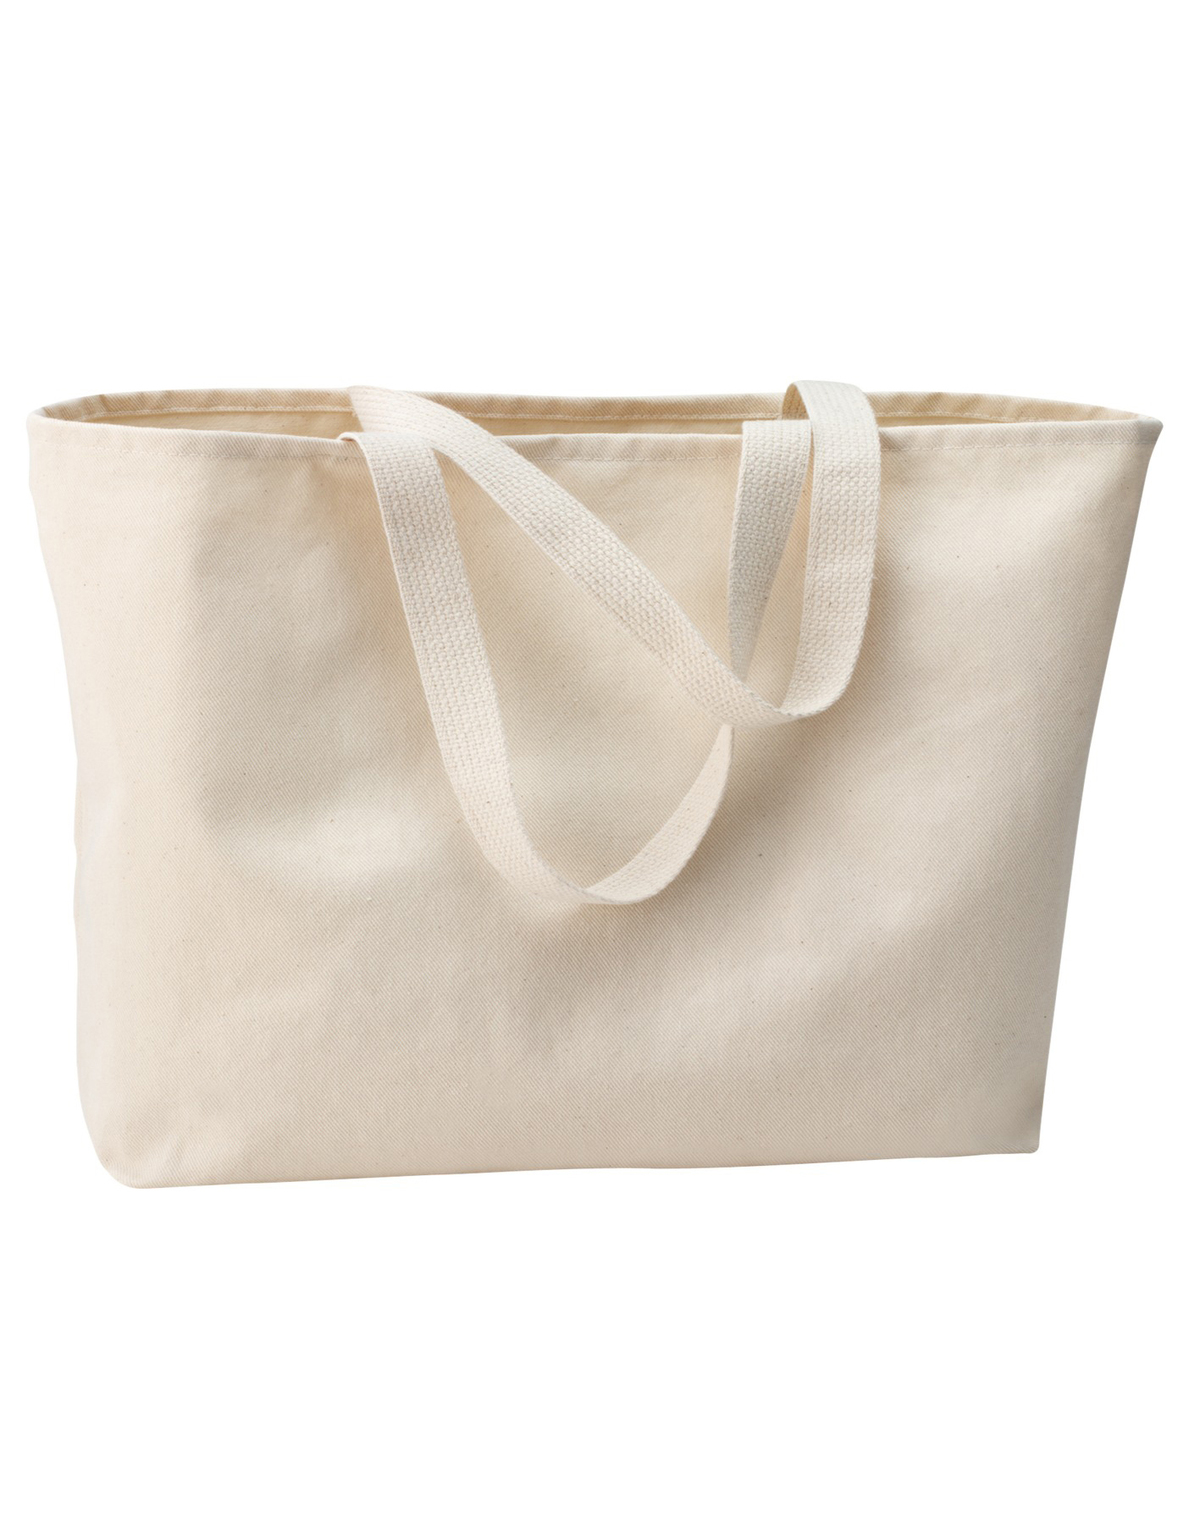 Wholesale Large Cotton Canvas Reusable Tote Bags - Jumbo